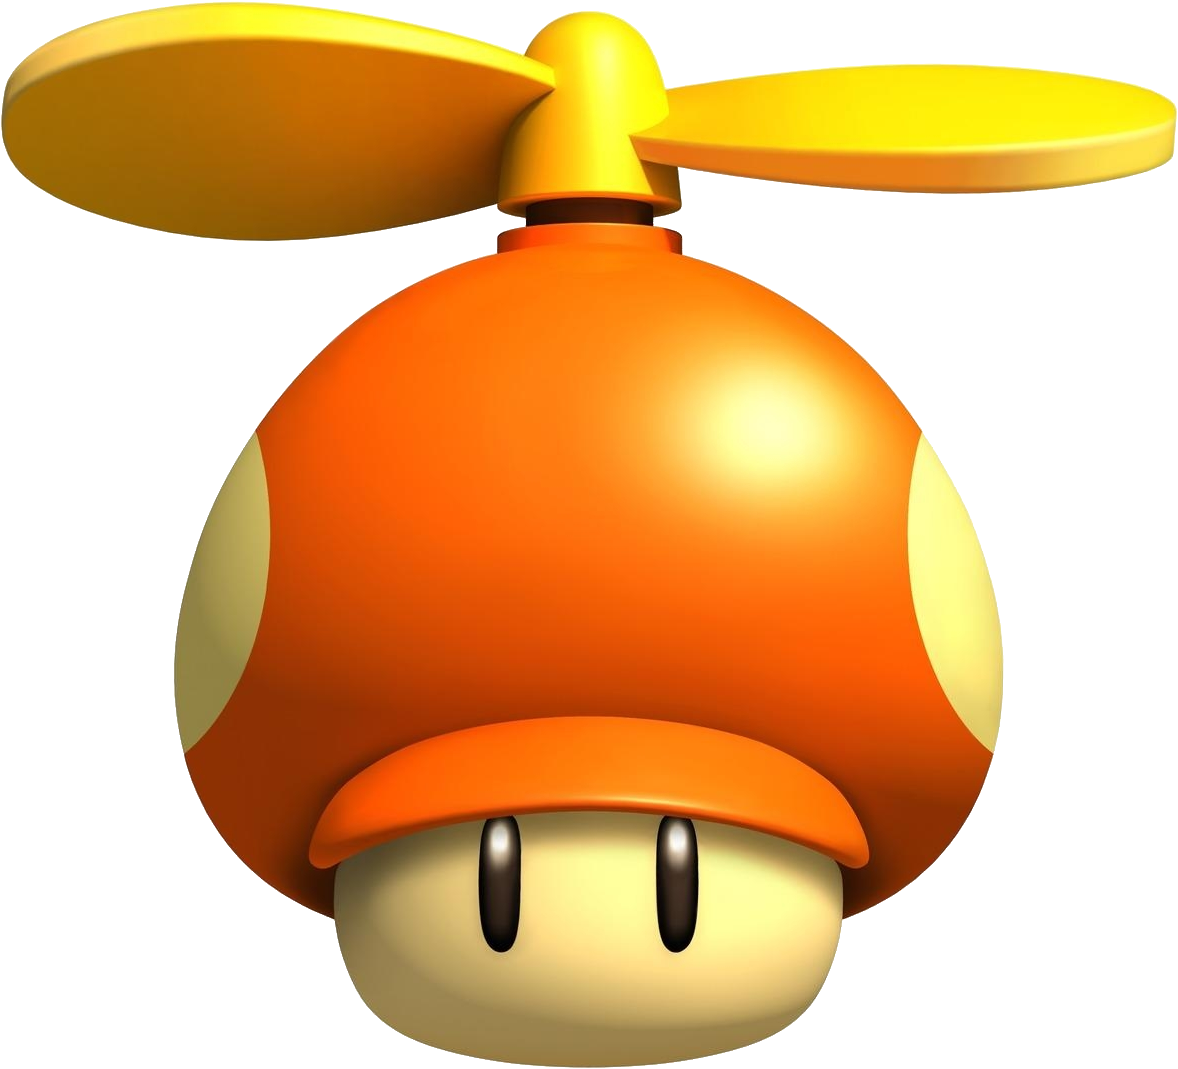 Super Mario Bros - Super Mario Propeller Mushroom (1178x1069)